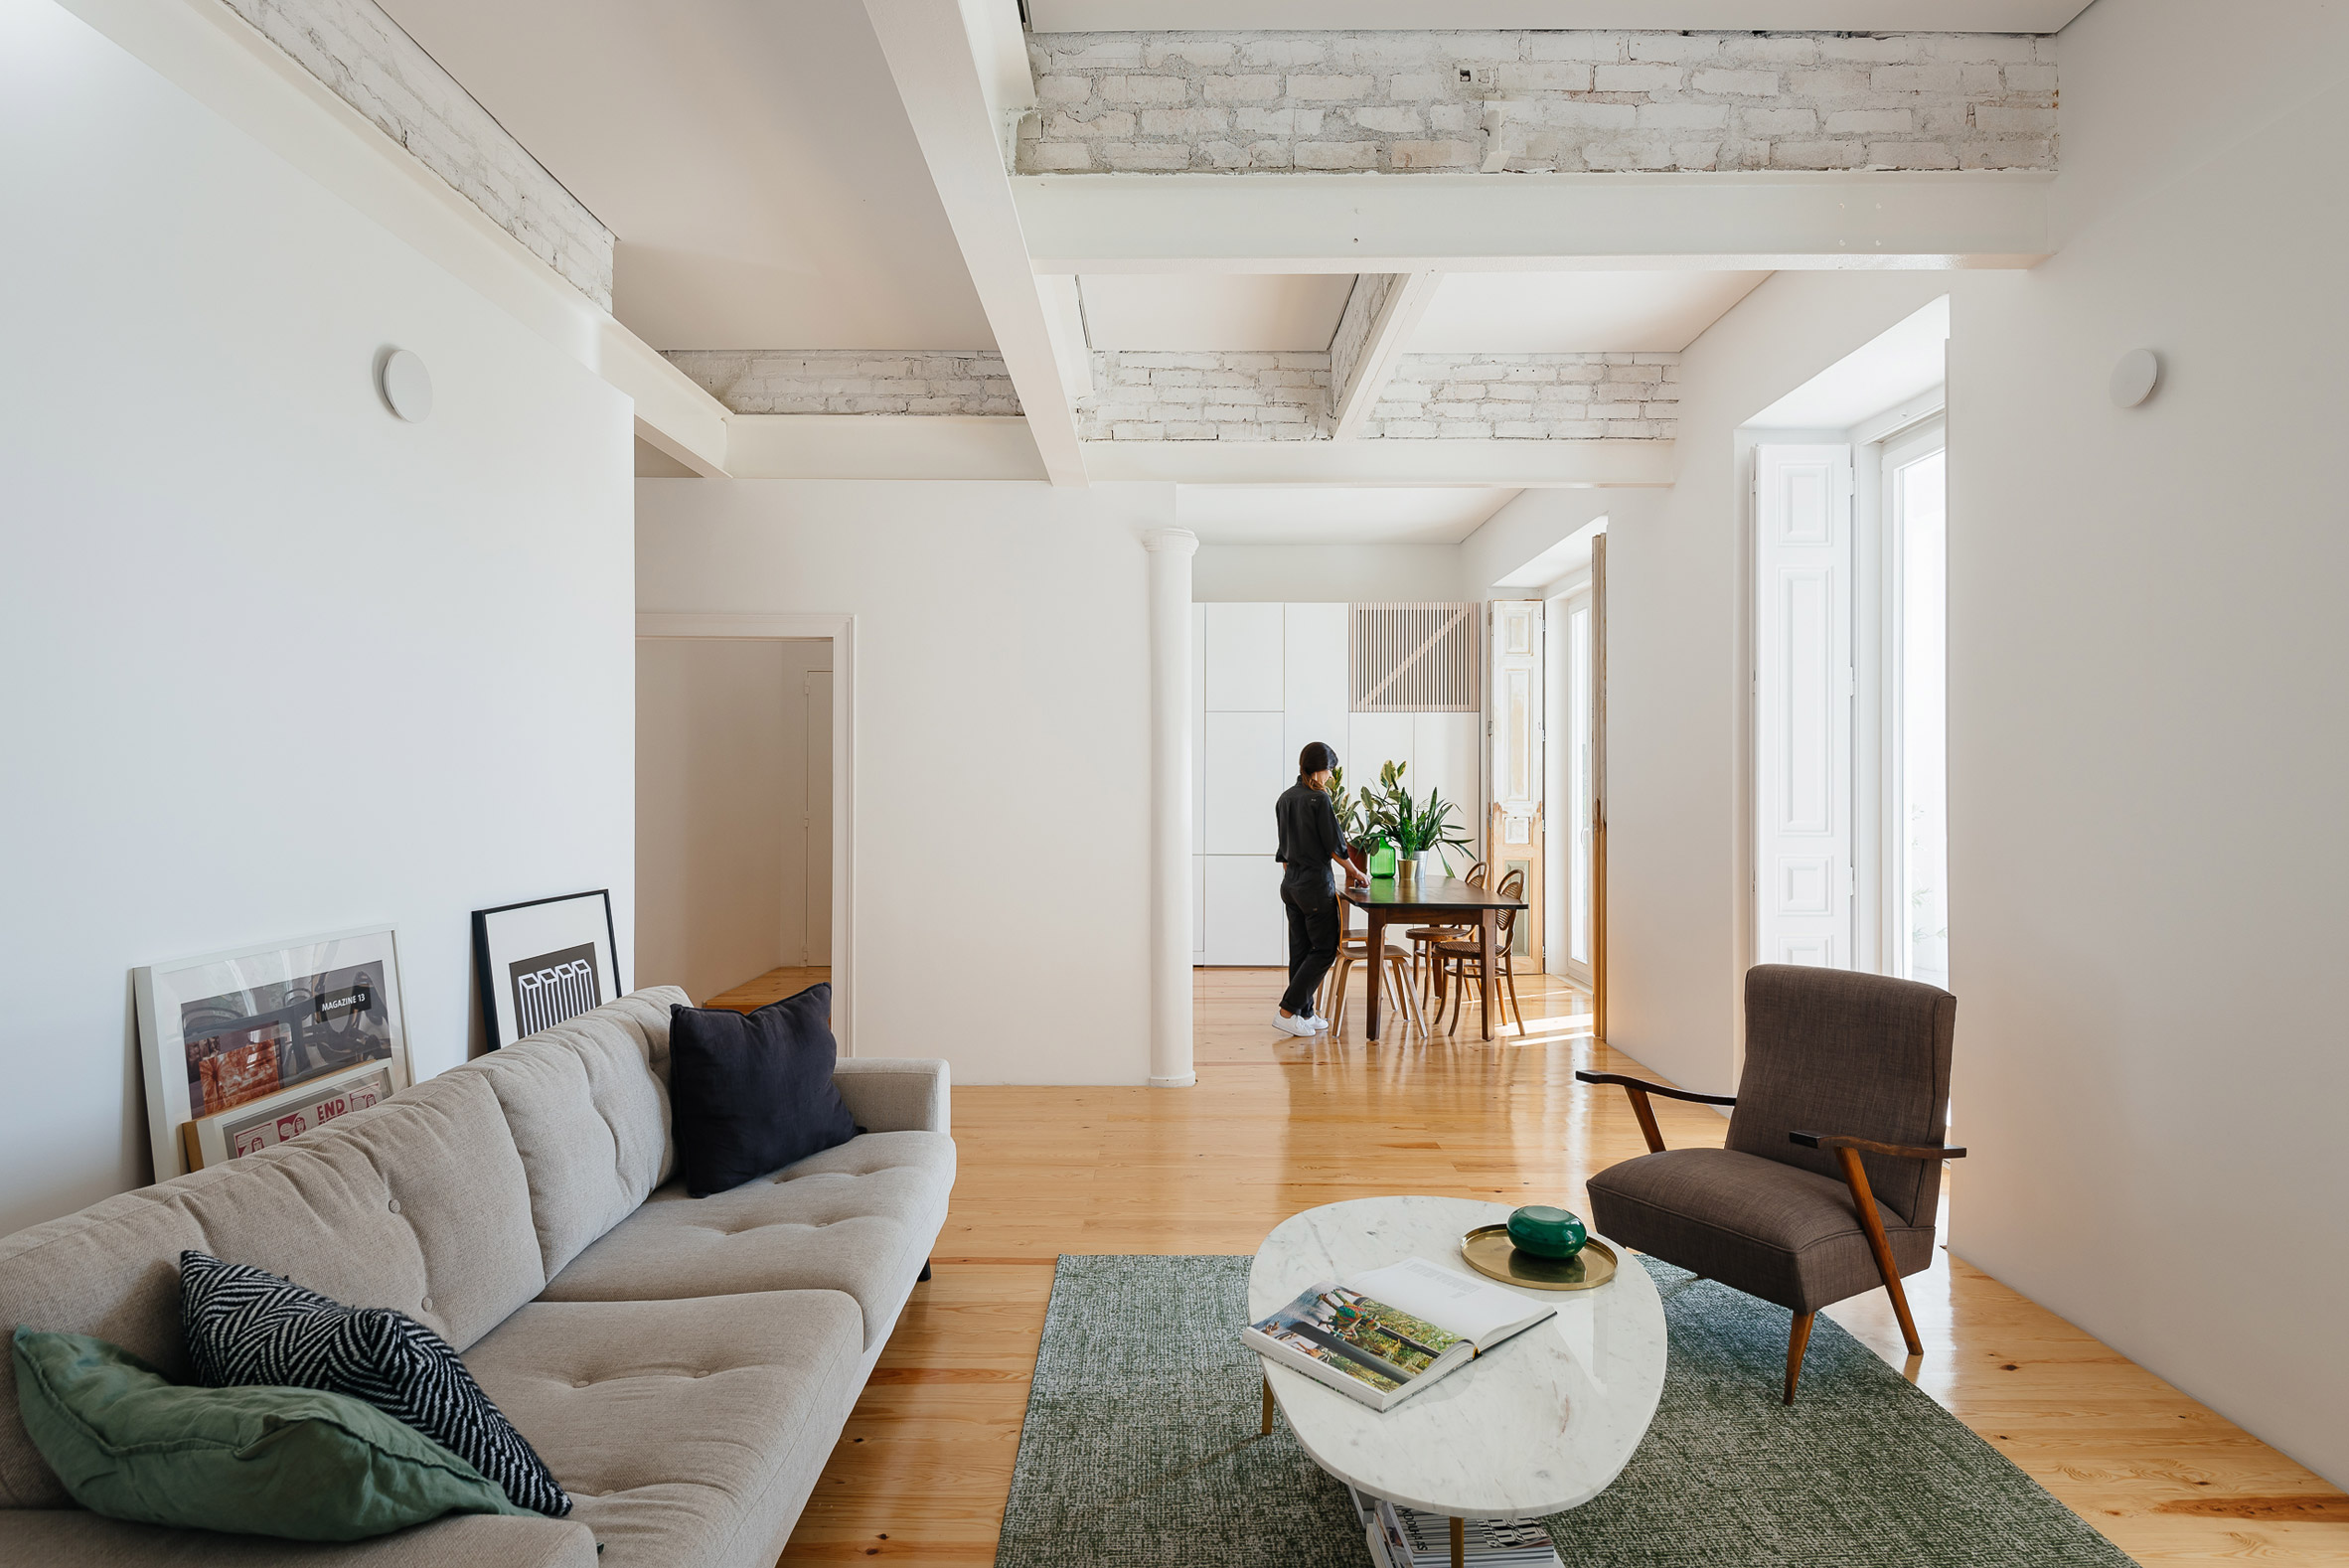 Filipe Fonseca da Costa keeps it simple in renovated Lisbon apartment